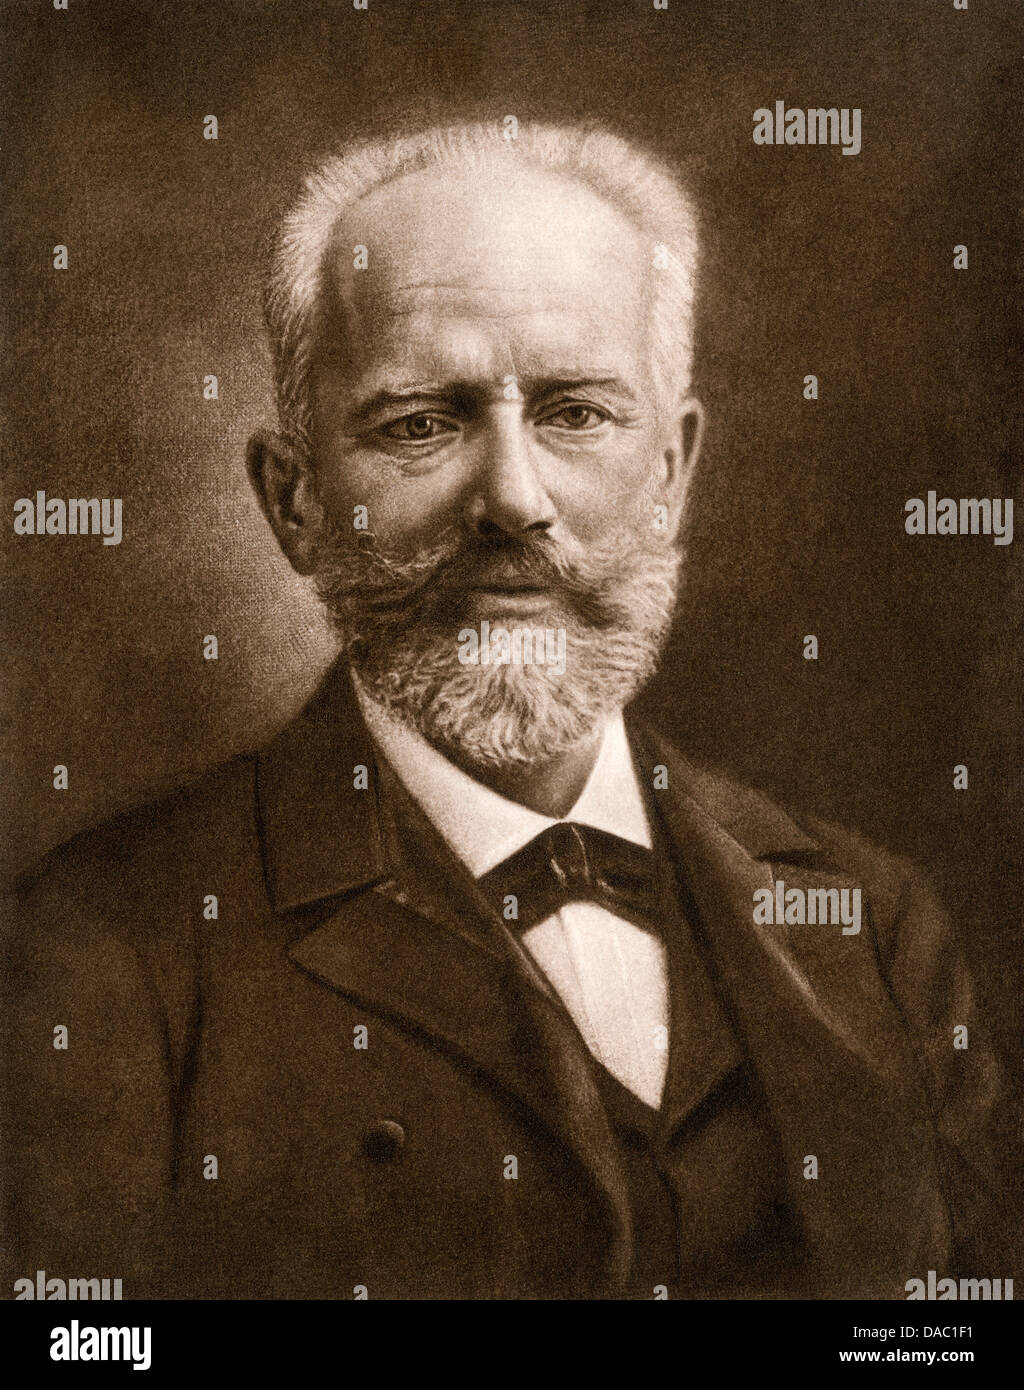 Russian composer Pyotr Ilich Tchaikovsky. Photograph Stock Photo